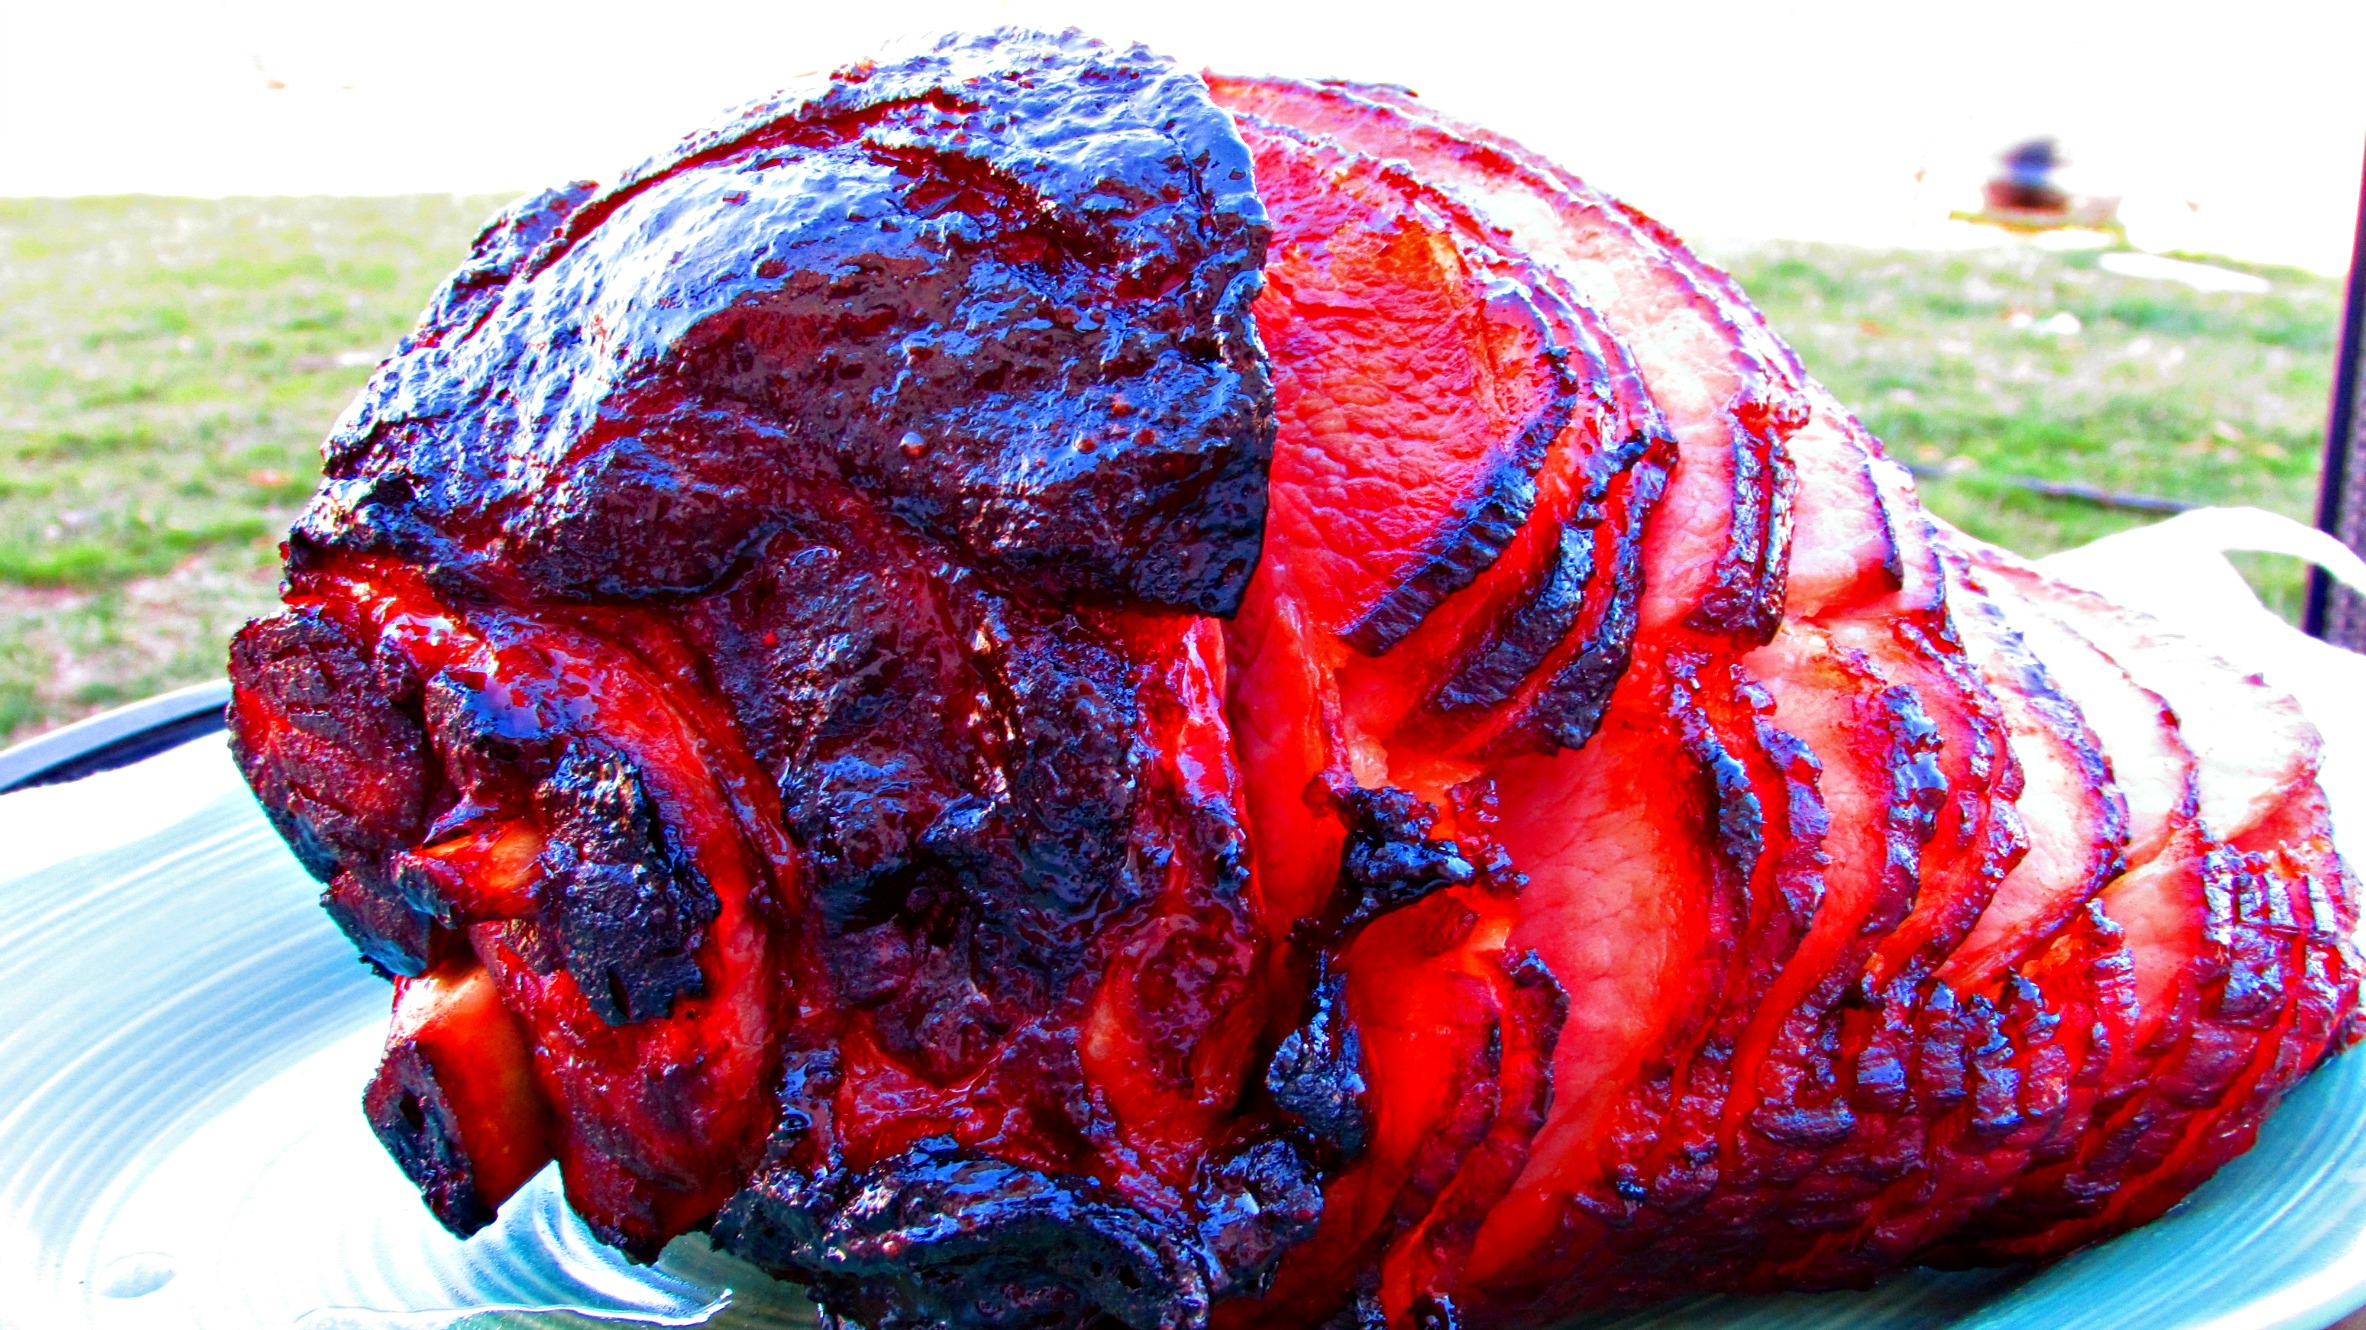 Spiral Sliced Honey Ham after Smoking